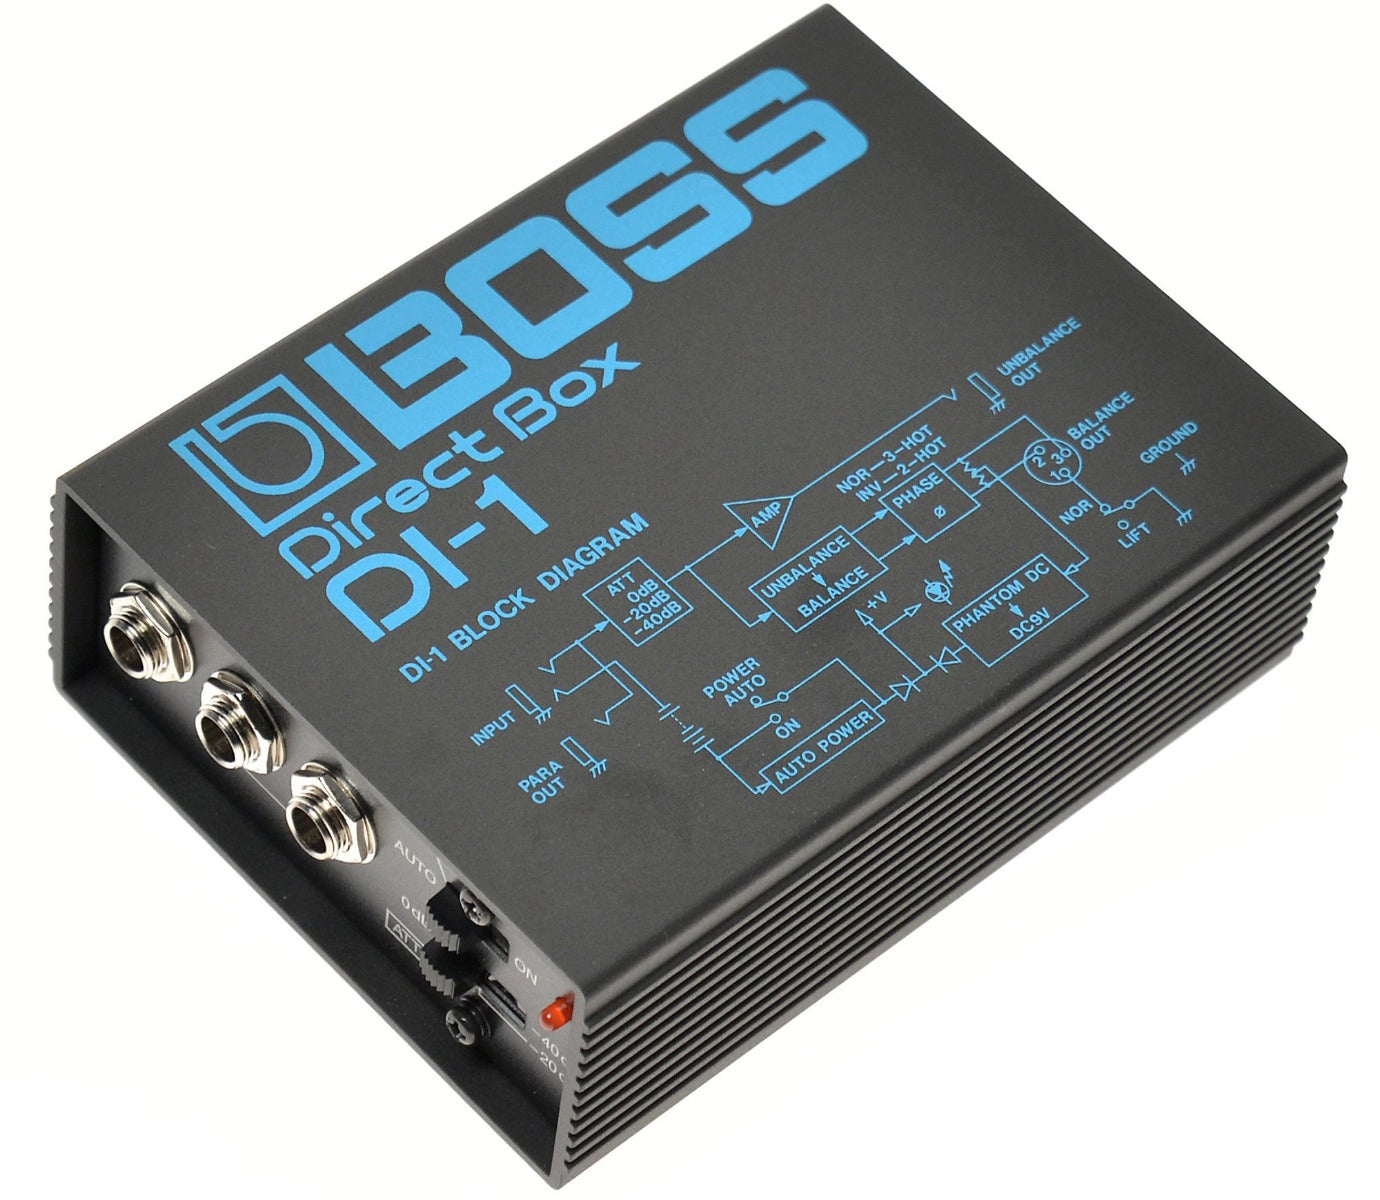 Boss DI-1 Direct Box